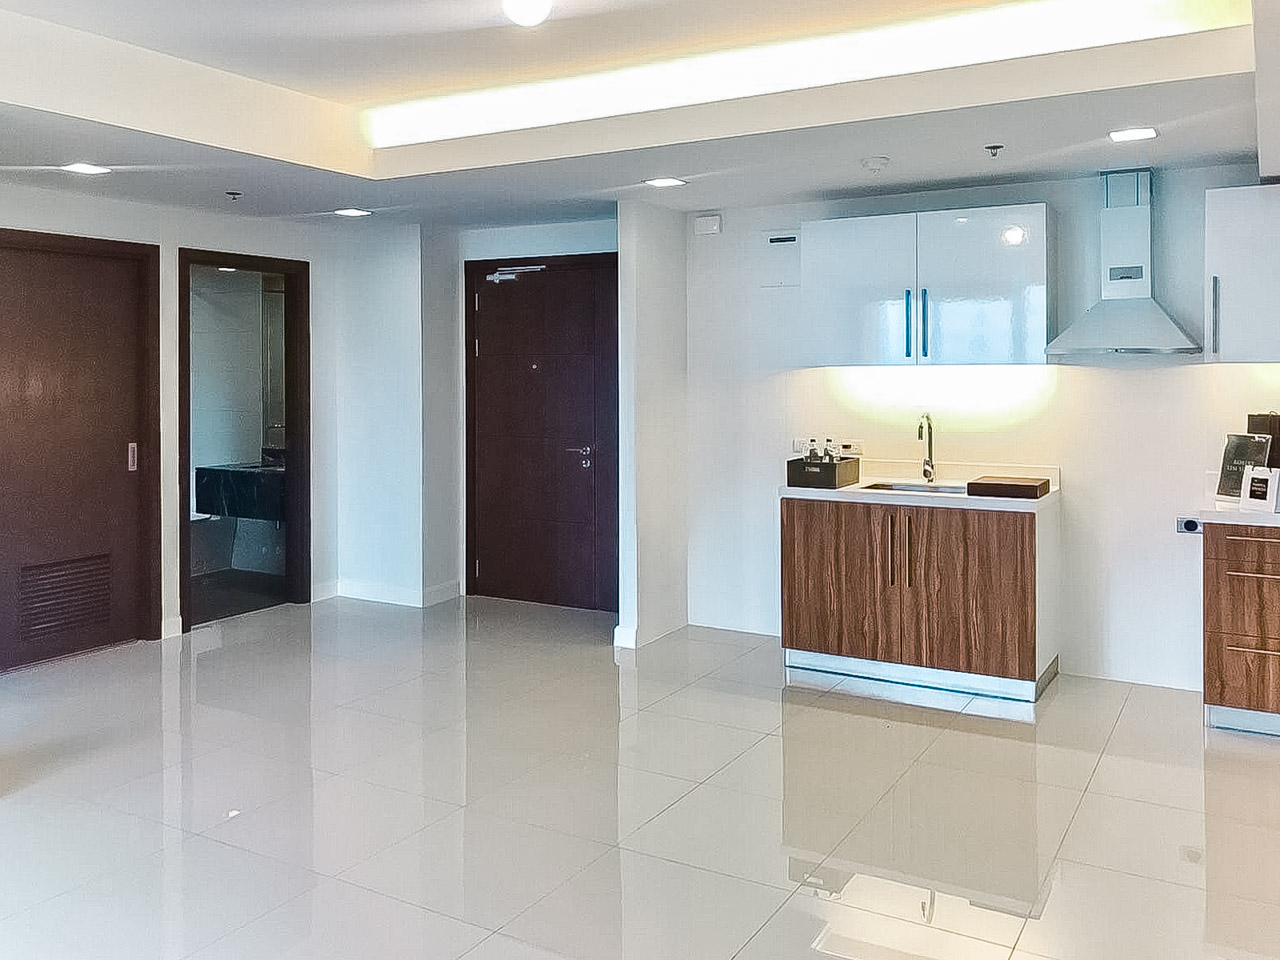 SRBAL5 Unfurnished 1 Bedroom Condo for Sale in Cebu Business Park - 3